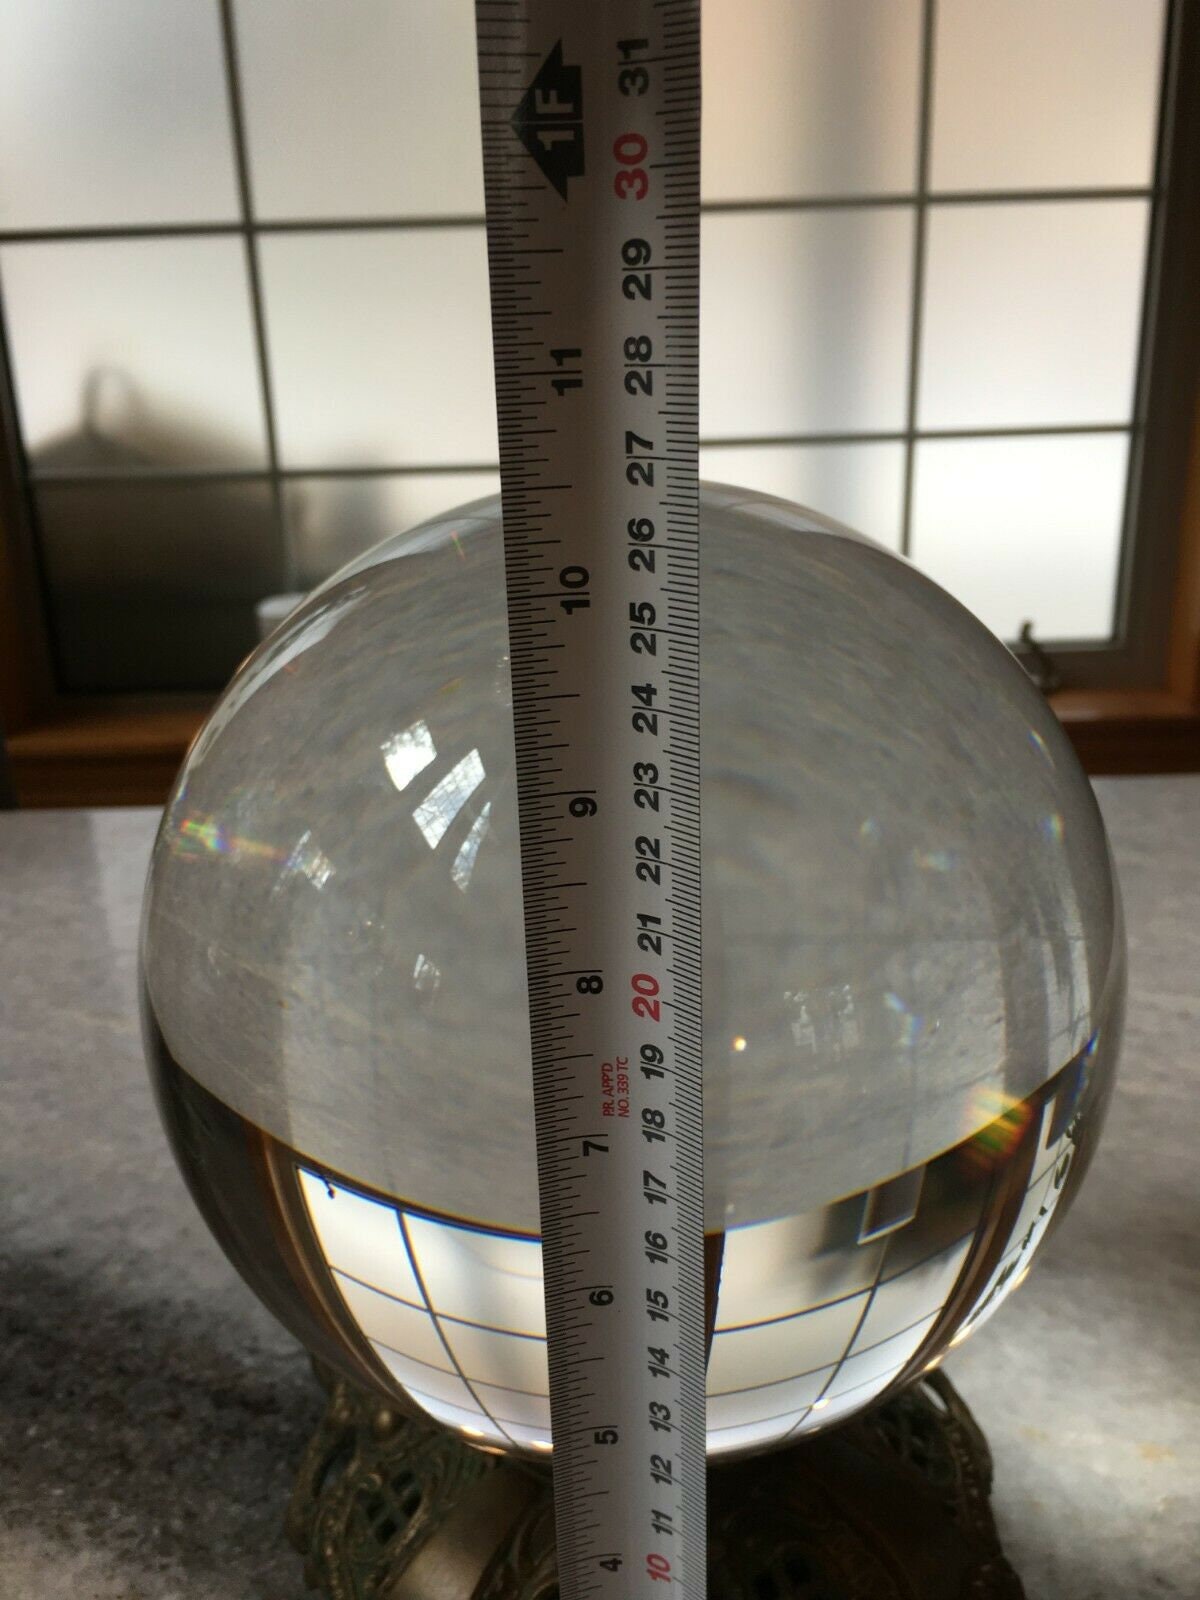 Bola de cristal foto de archivo. Imagen de global, iguales - 106826